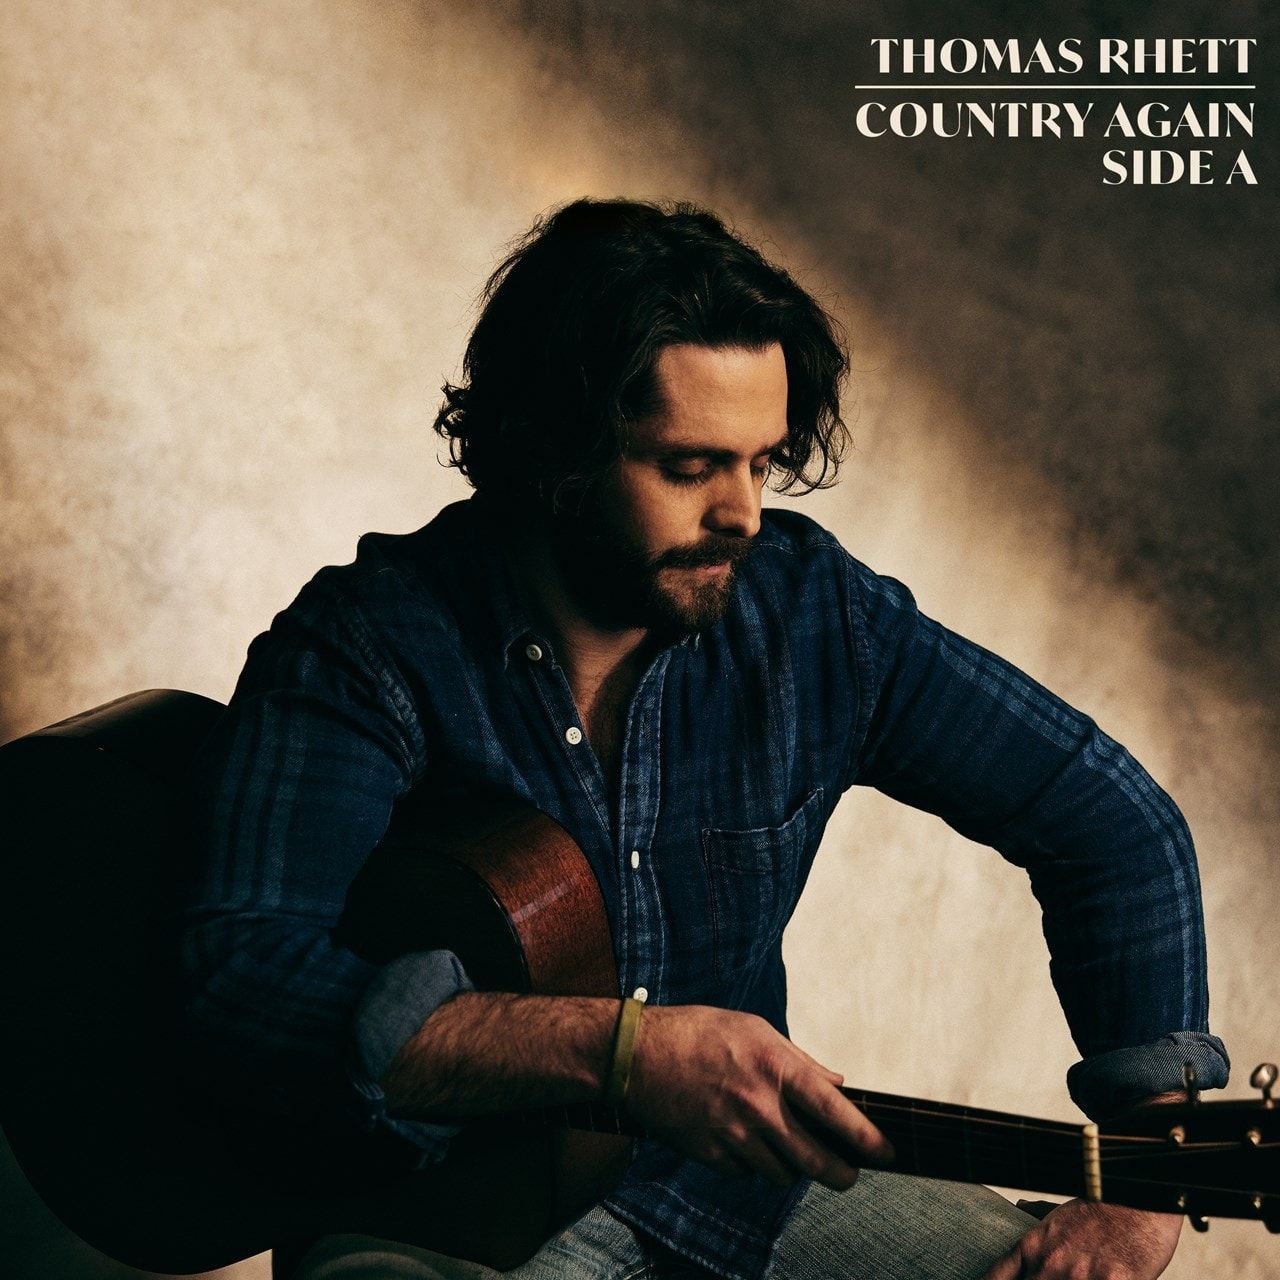 Album: Thomas Rhett - Country Again Side A